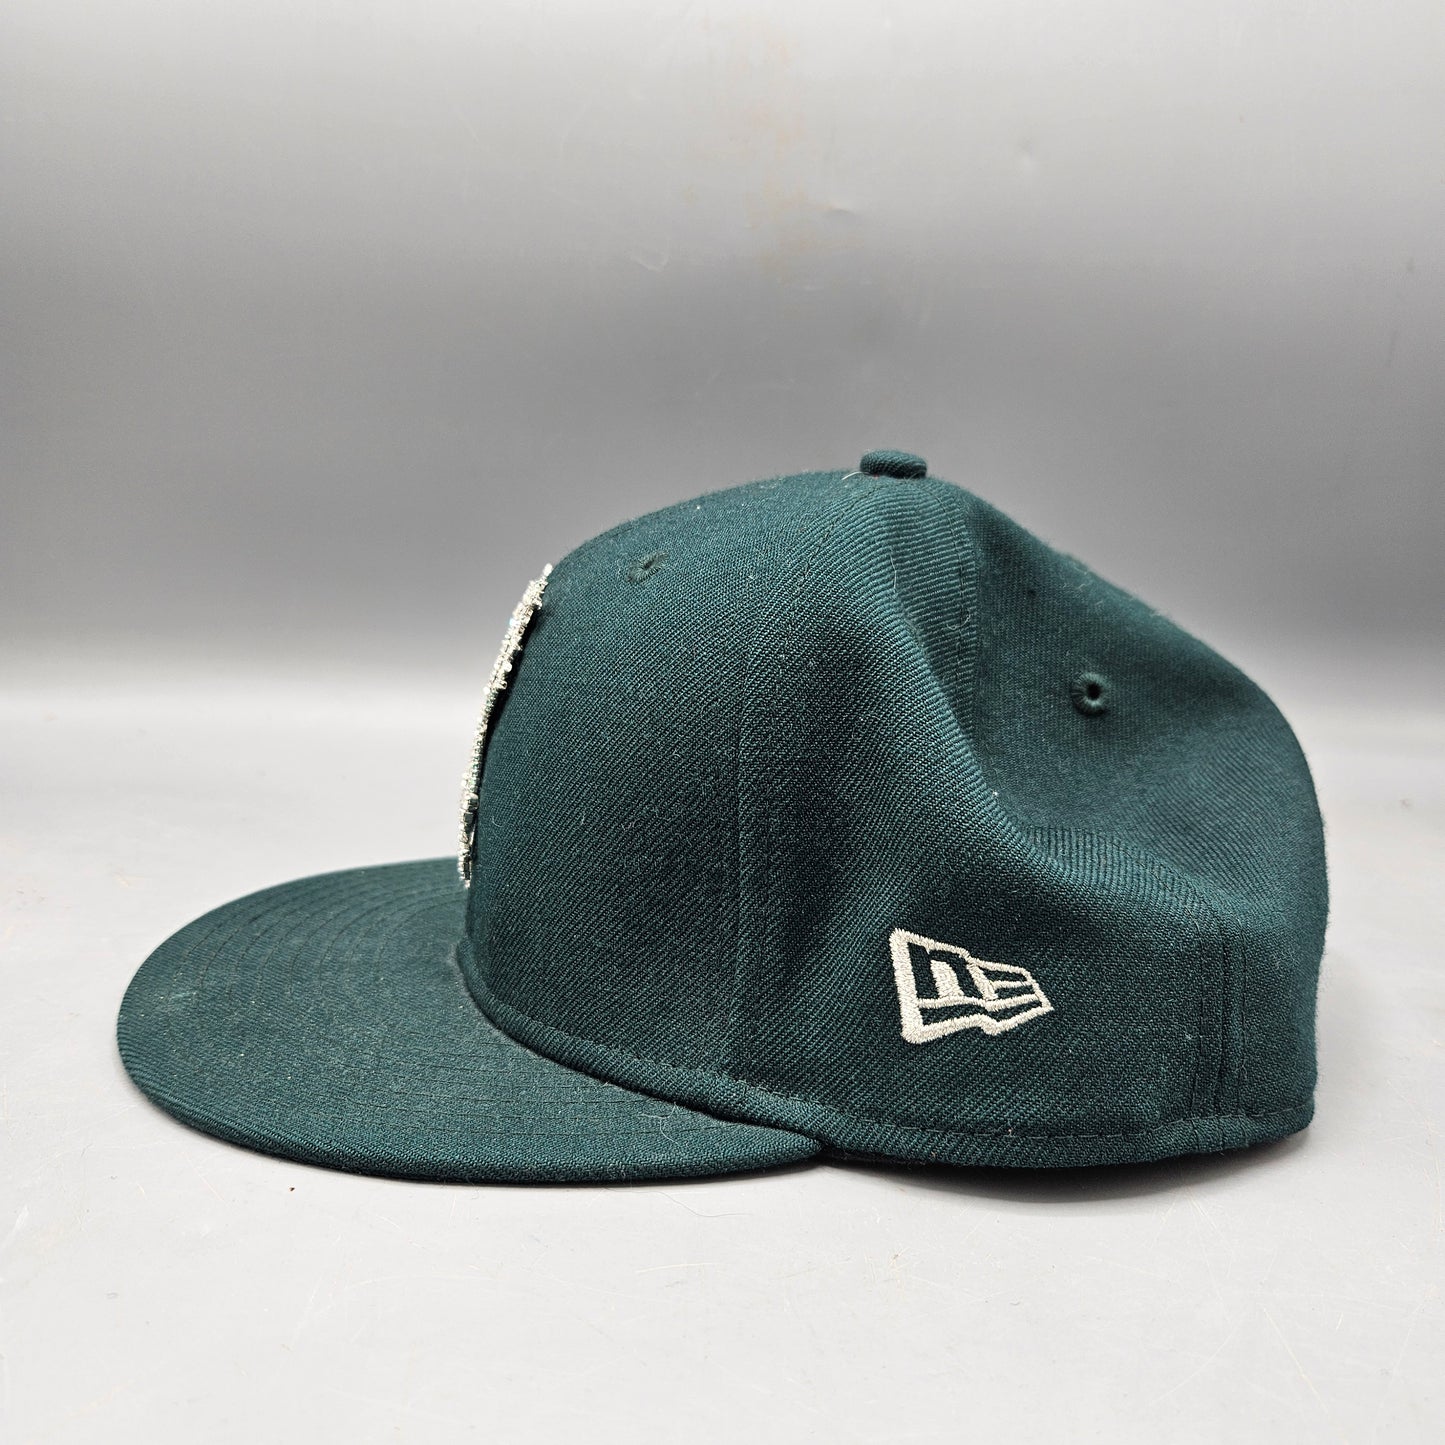 Green 59 New Era Green Felt Baseball Cap with Rhinestone Dragon